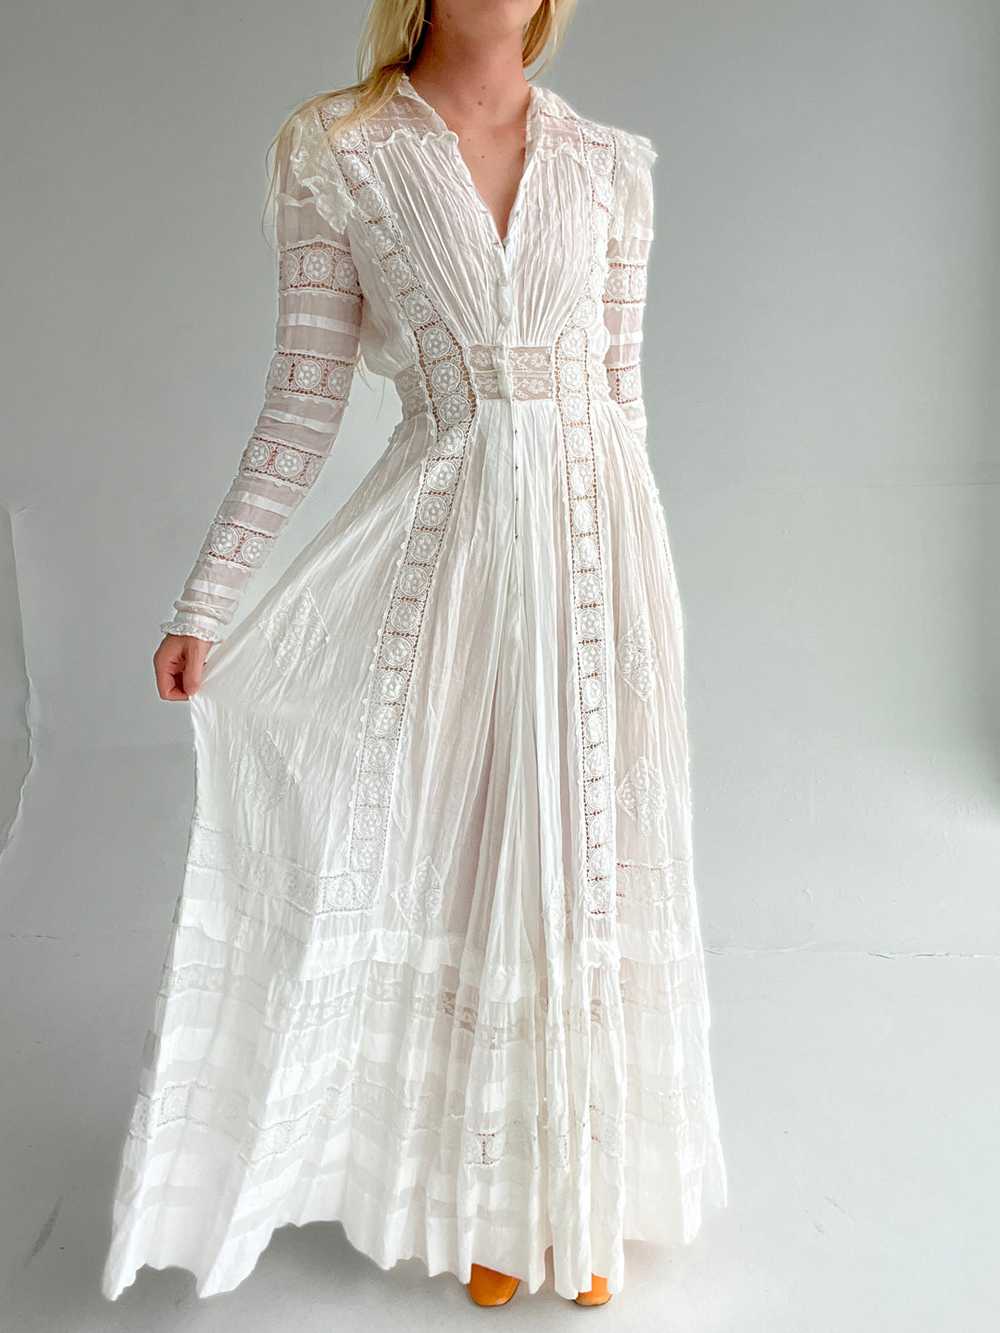 Edwardian White Cotton Long Sleeve Lawn Dress - image 2